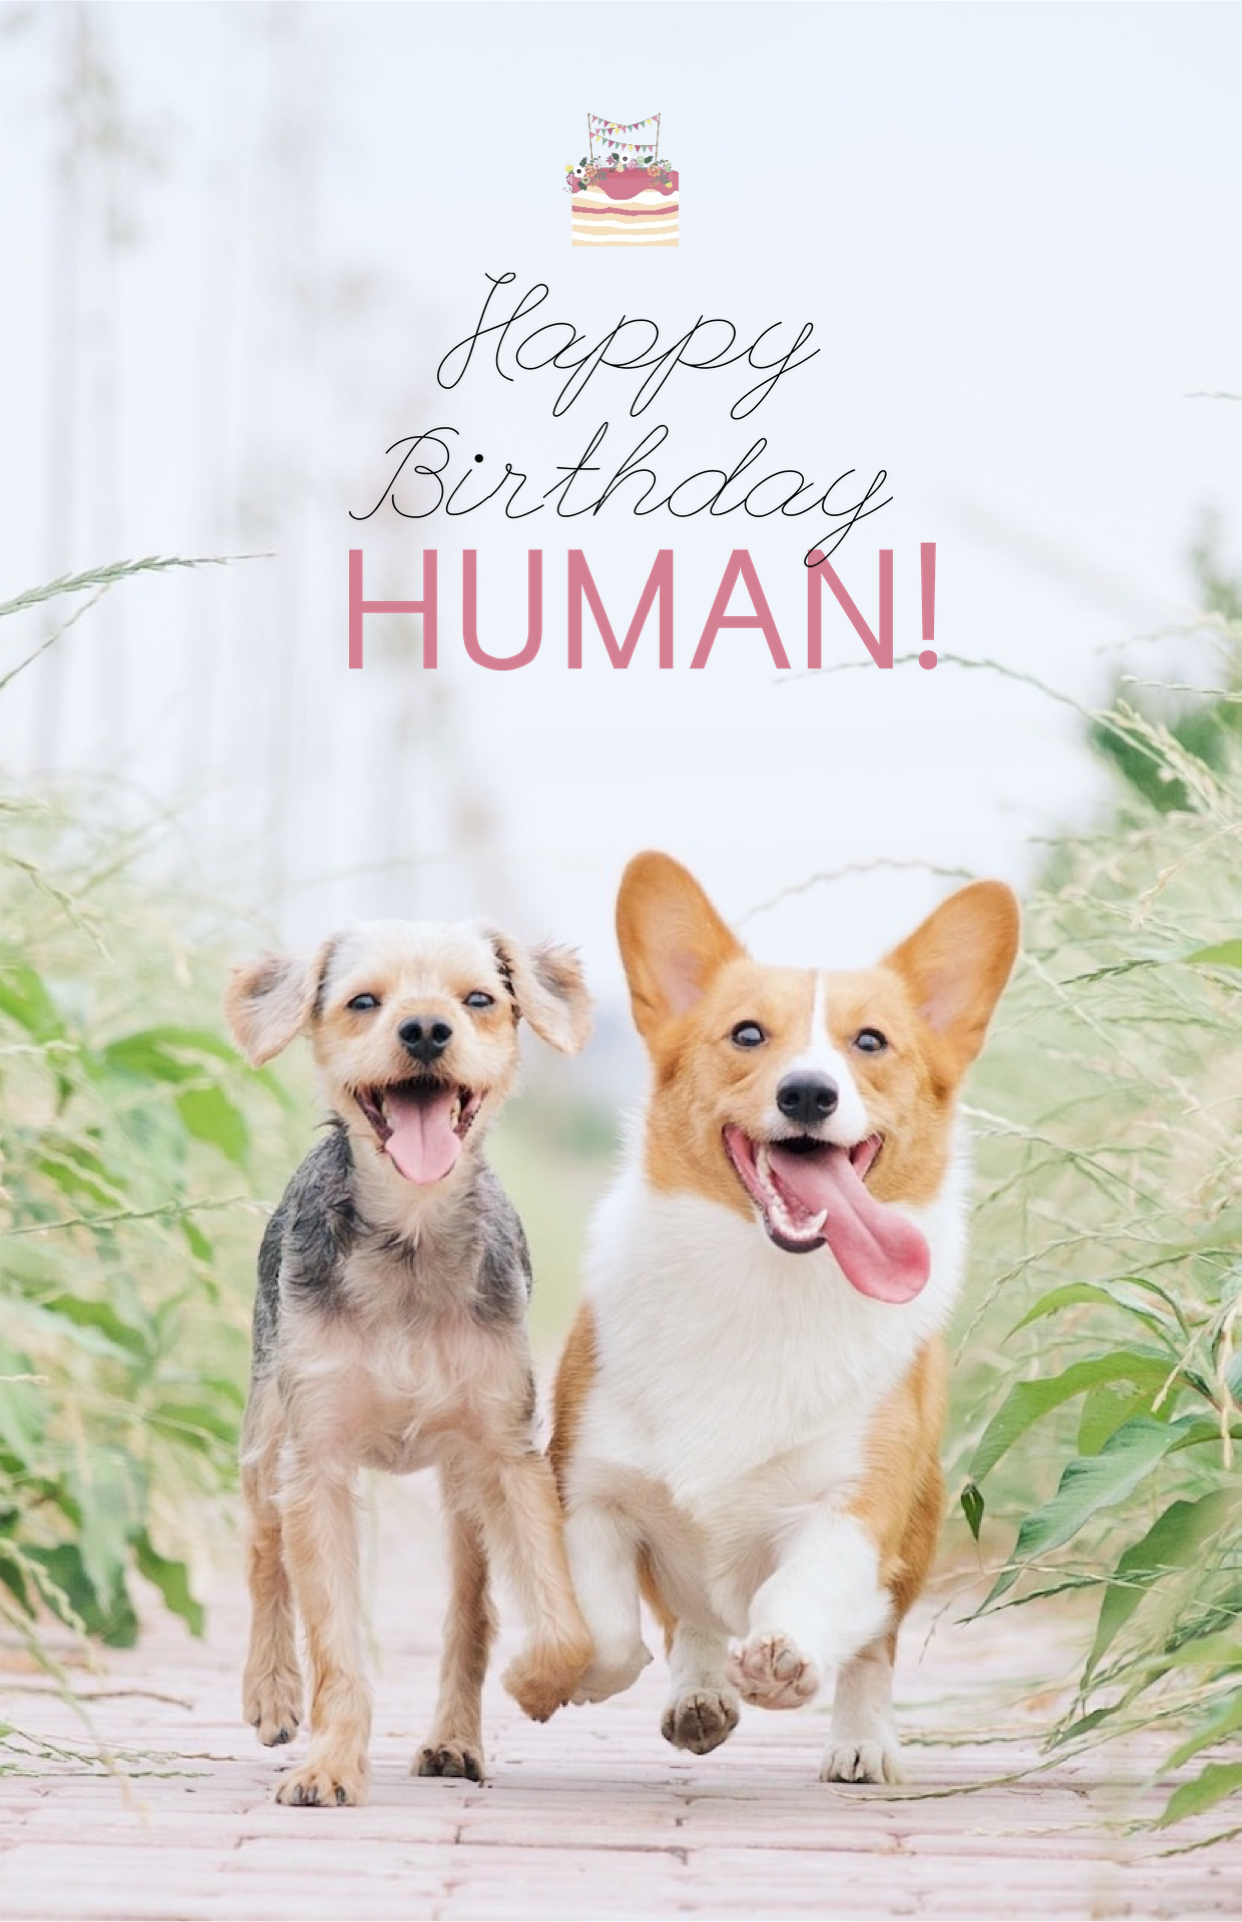 Cute Dogs Wishing Happy Birthday Human Template